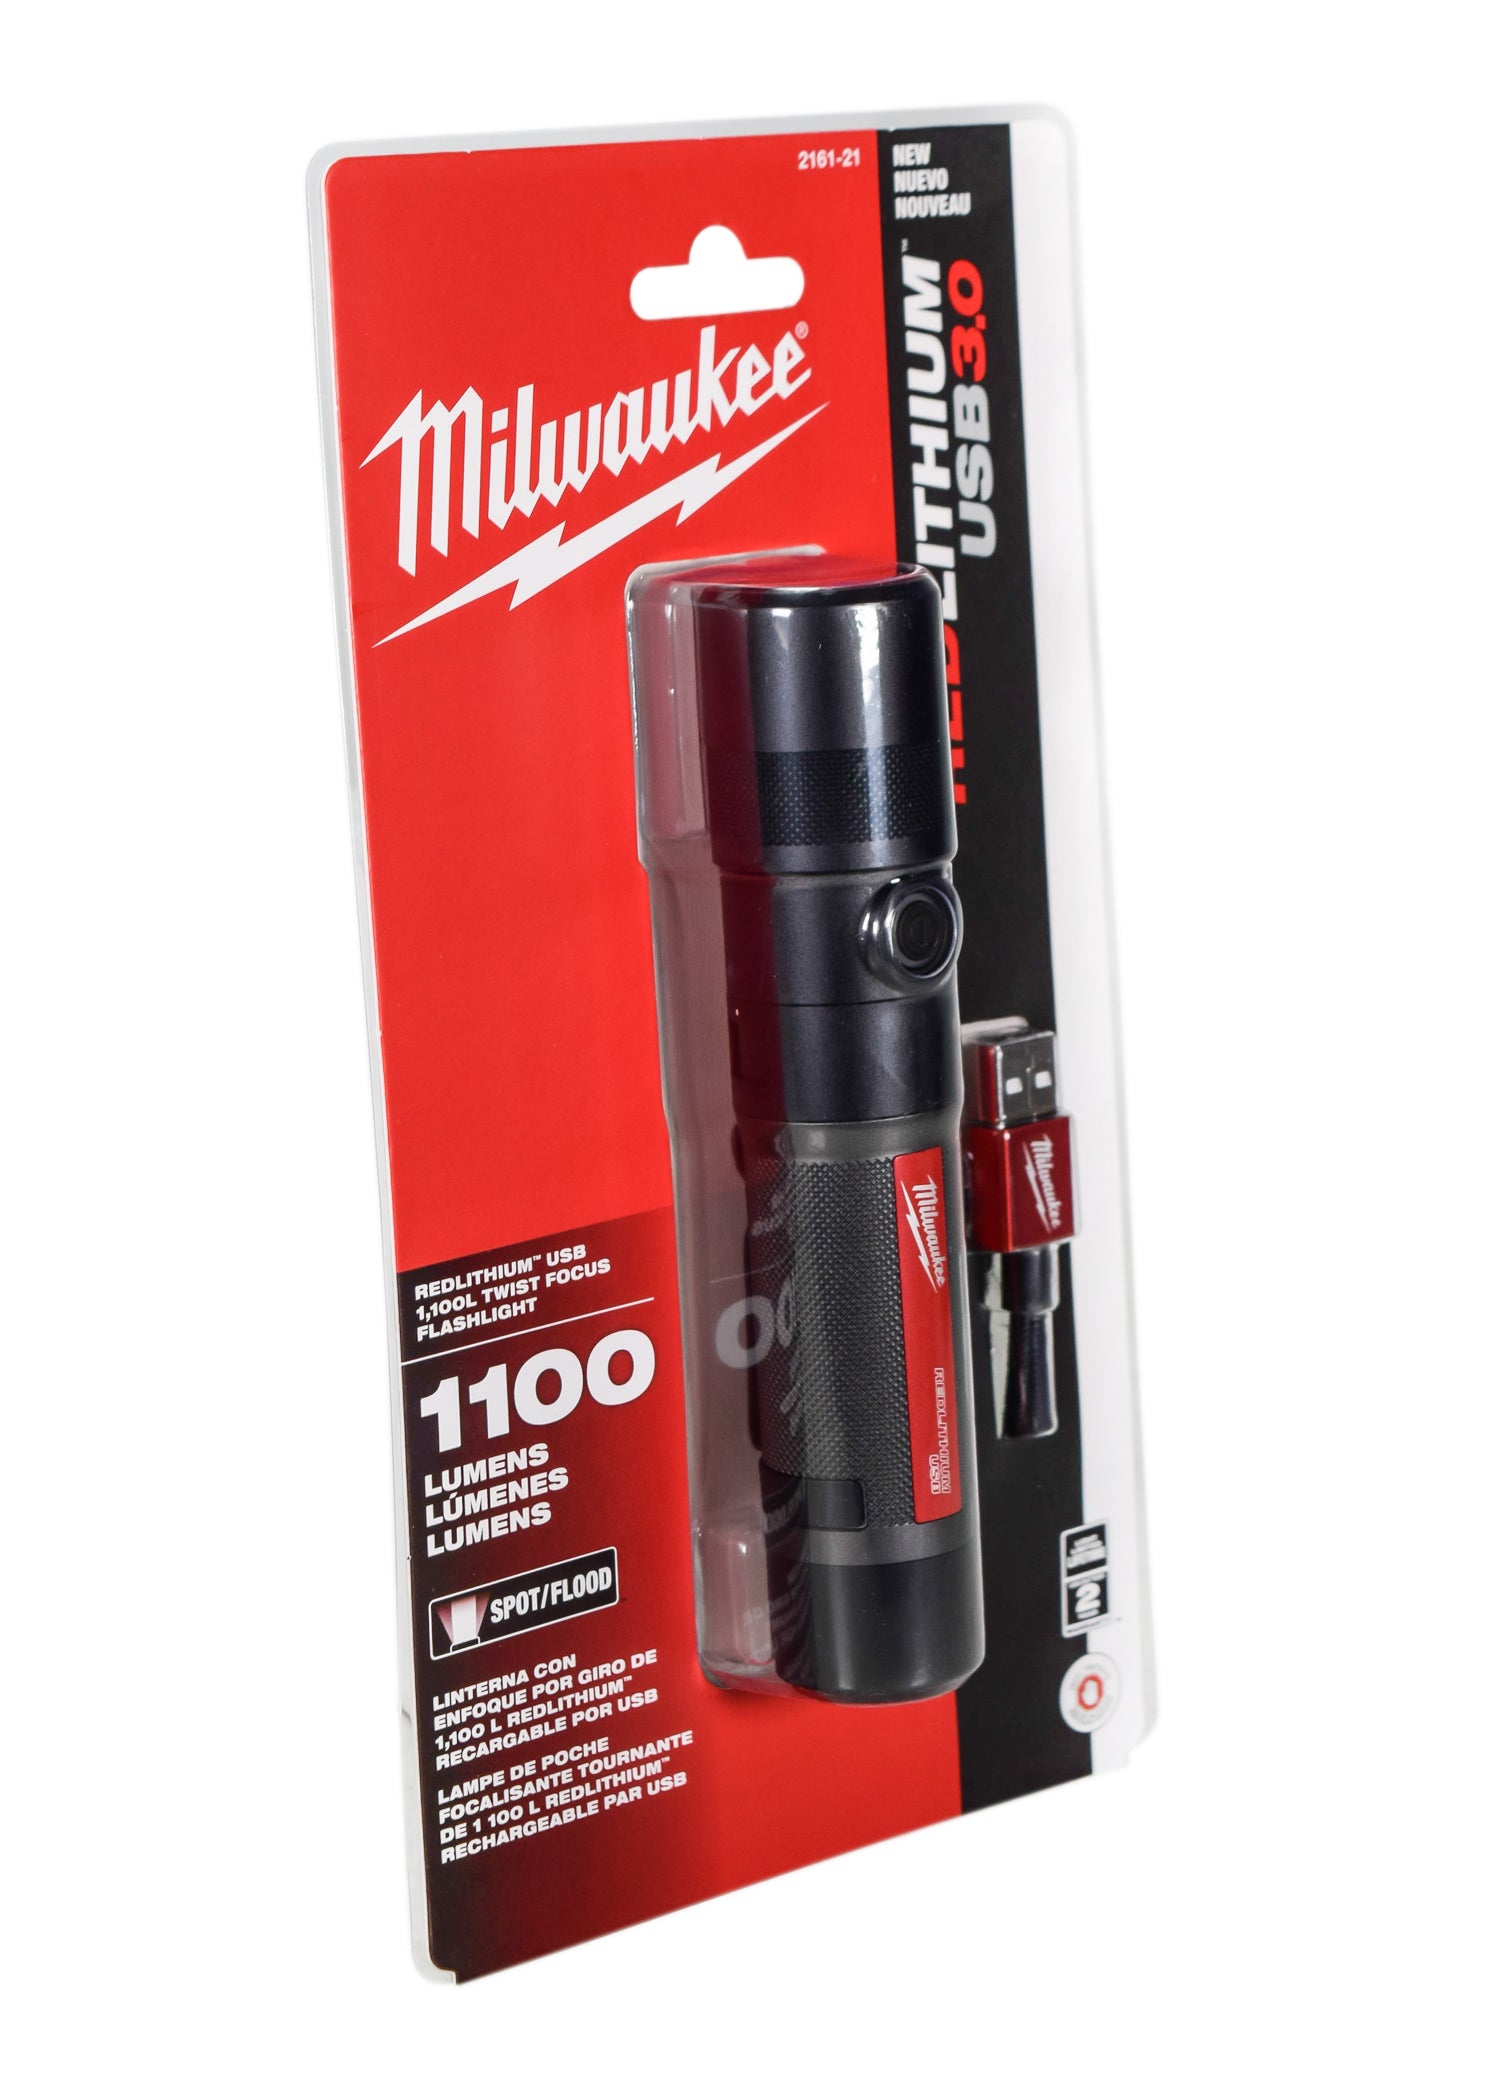 Milwaukee 2161-21 USB Recharrgeable 1100LTwist Focus Flashlight